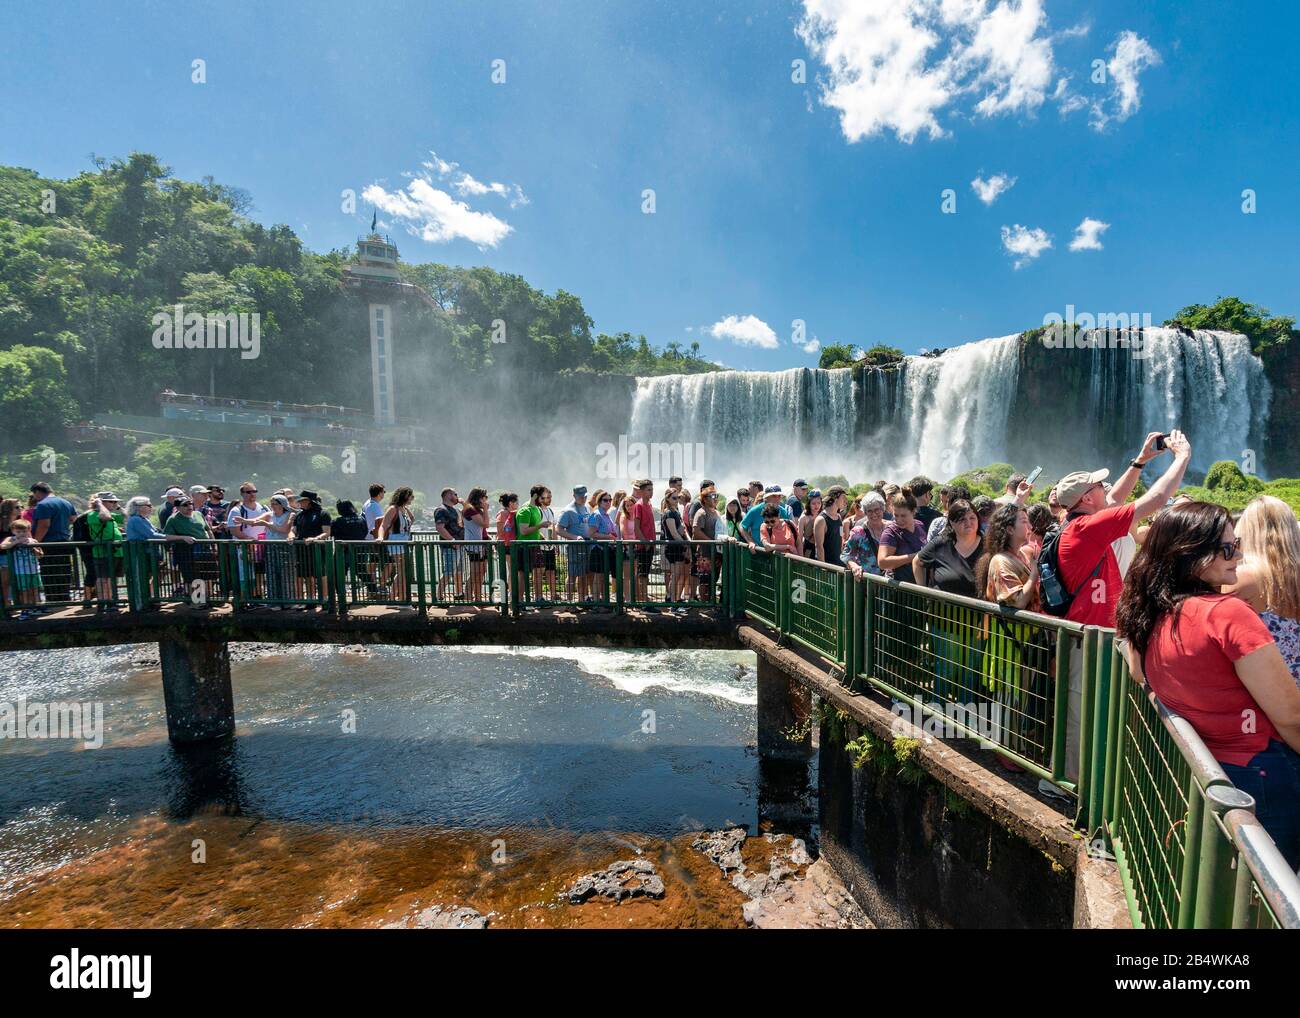 Crowds of tourists at Iguacu Falls (Foz do Iguaçu), Brazil. Stock Photo